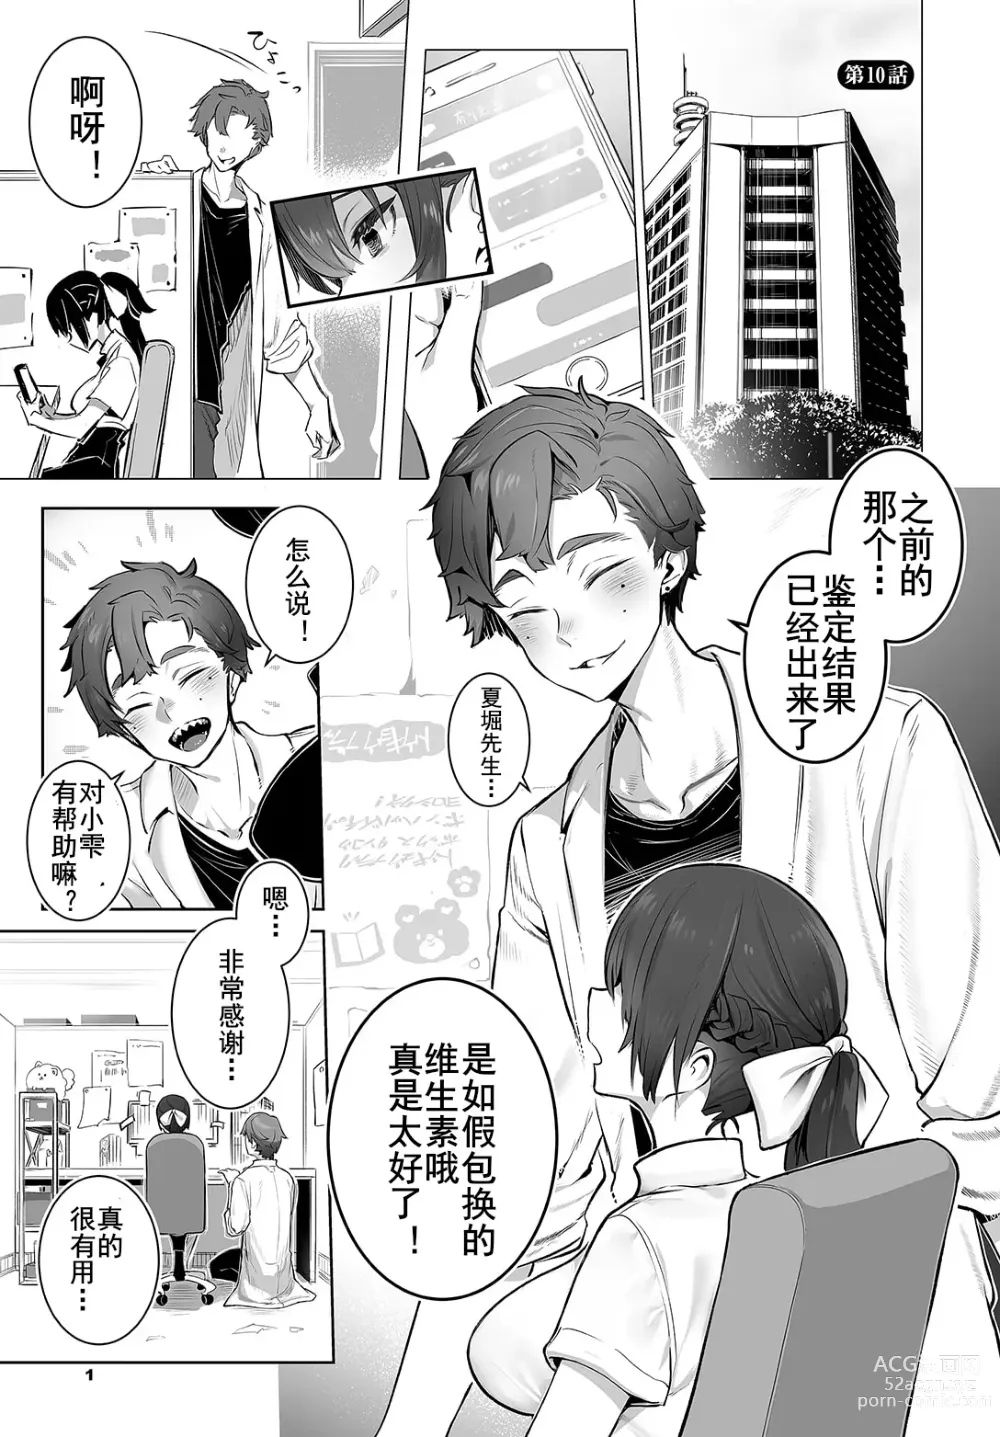 Page 2 of manga 东京黑匣子-抖S教授的疑案报告 10